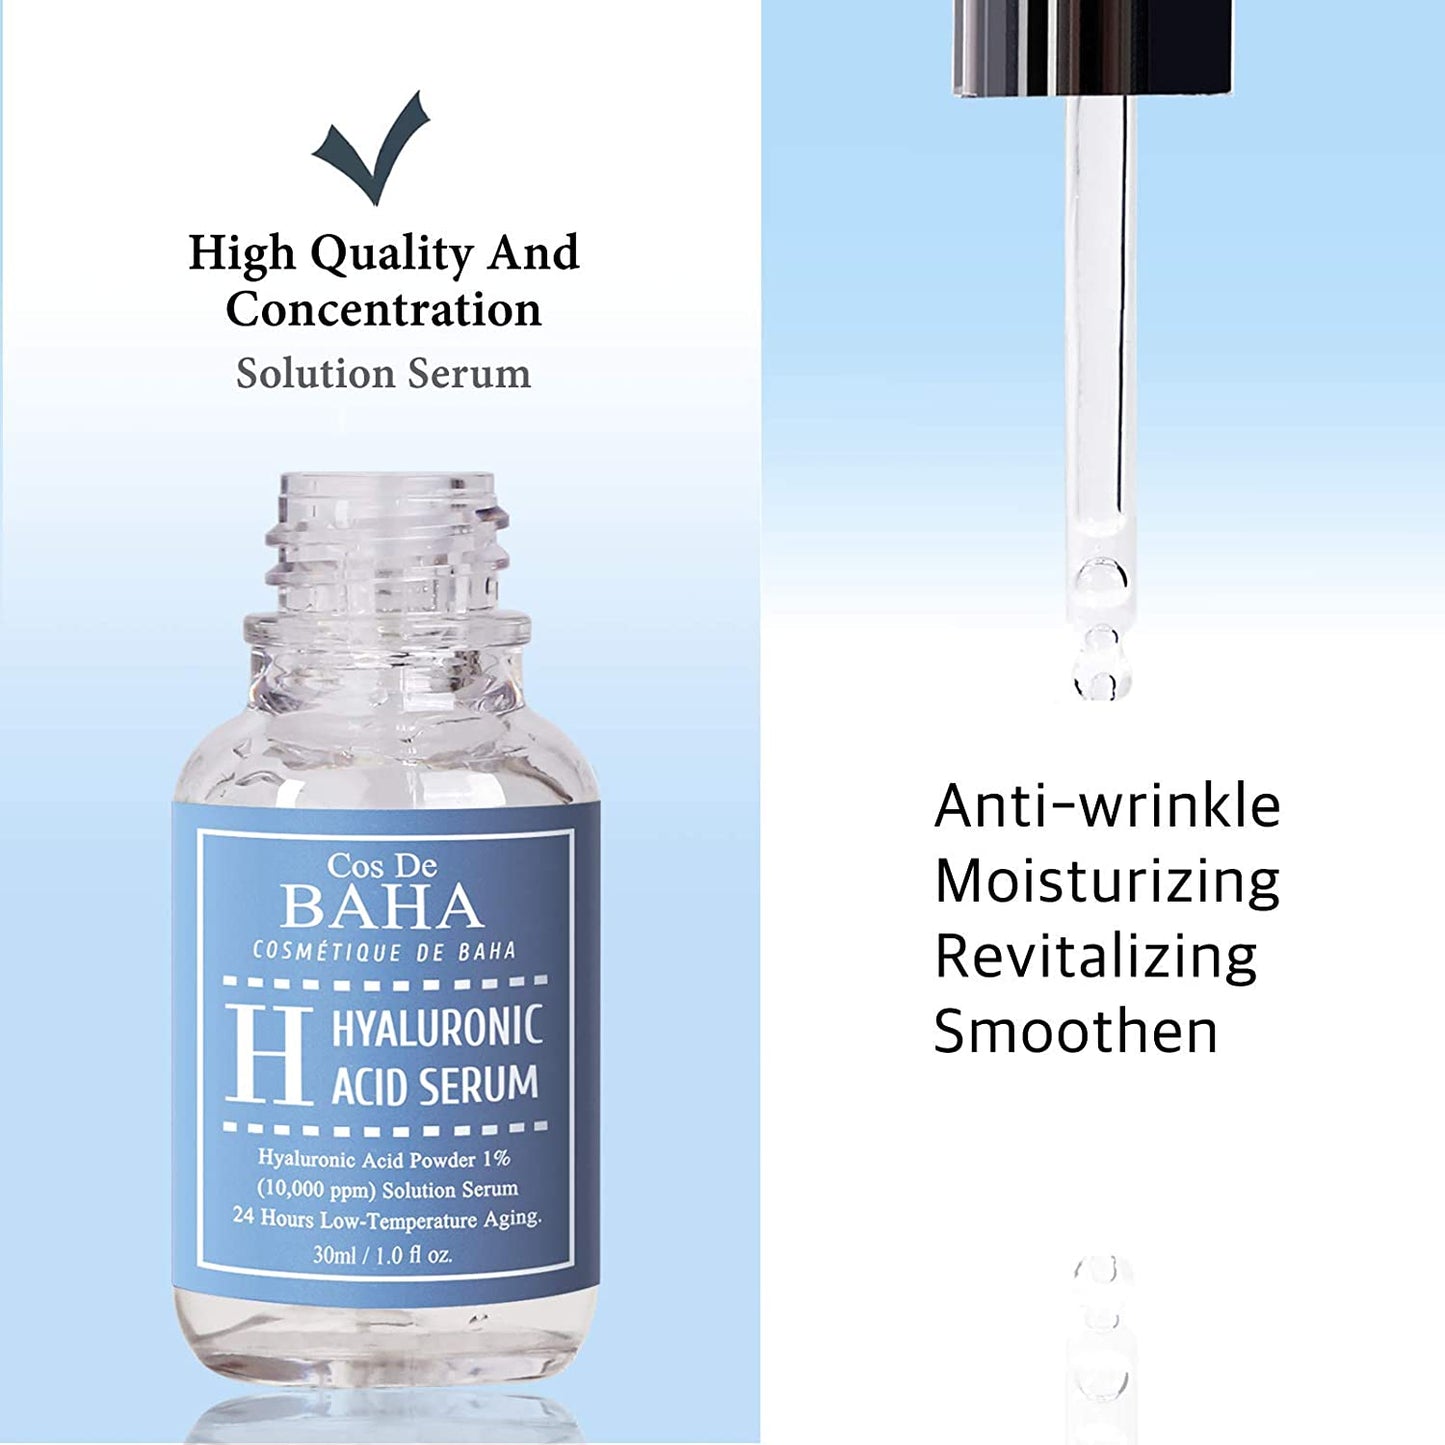 Cos De BAHA Pure Hyaluronic Acid 1% Facial Serum HA Face Hydration Plump Collagen Booster